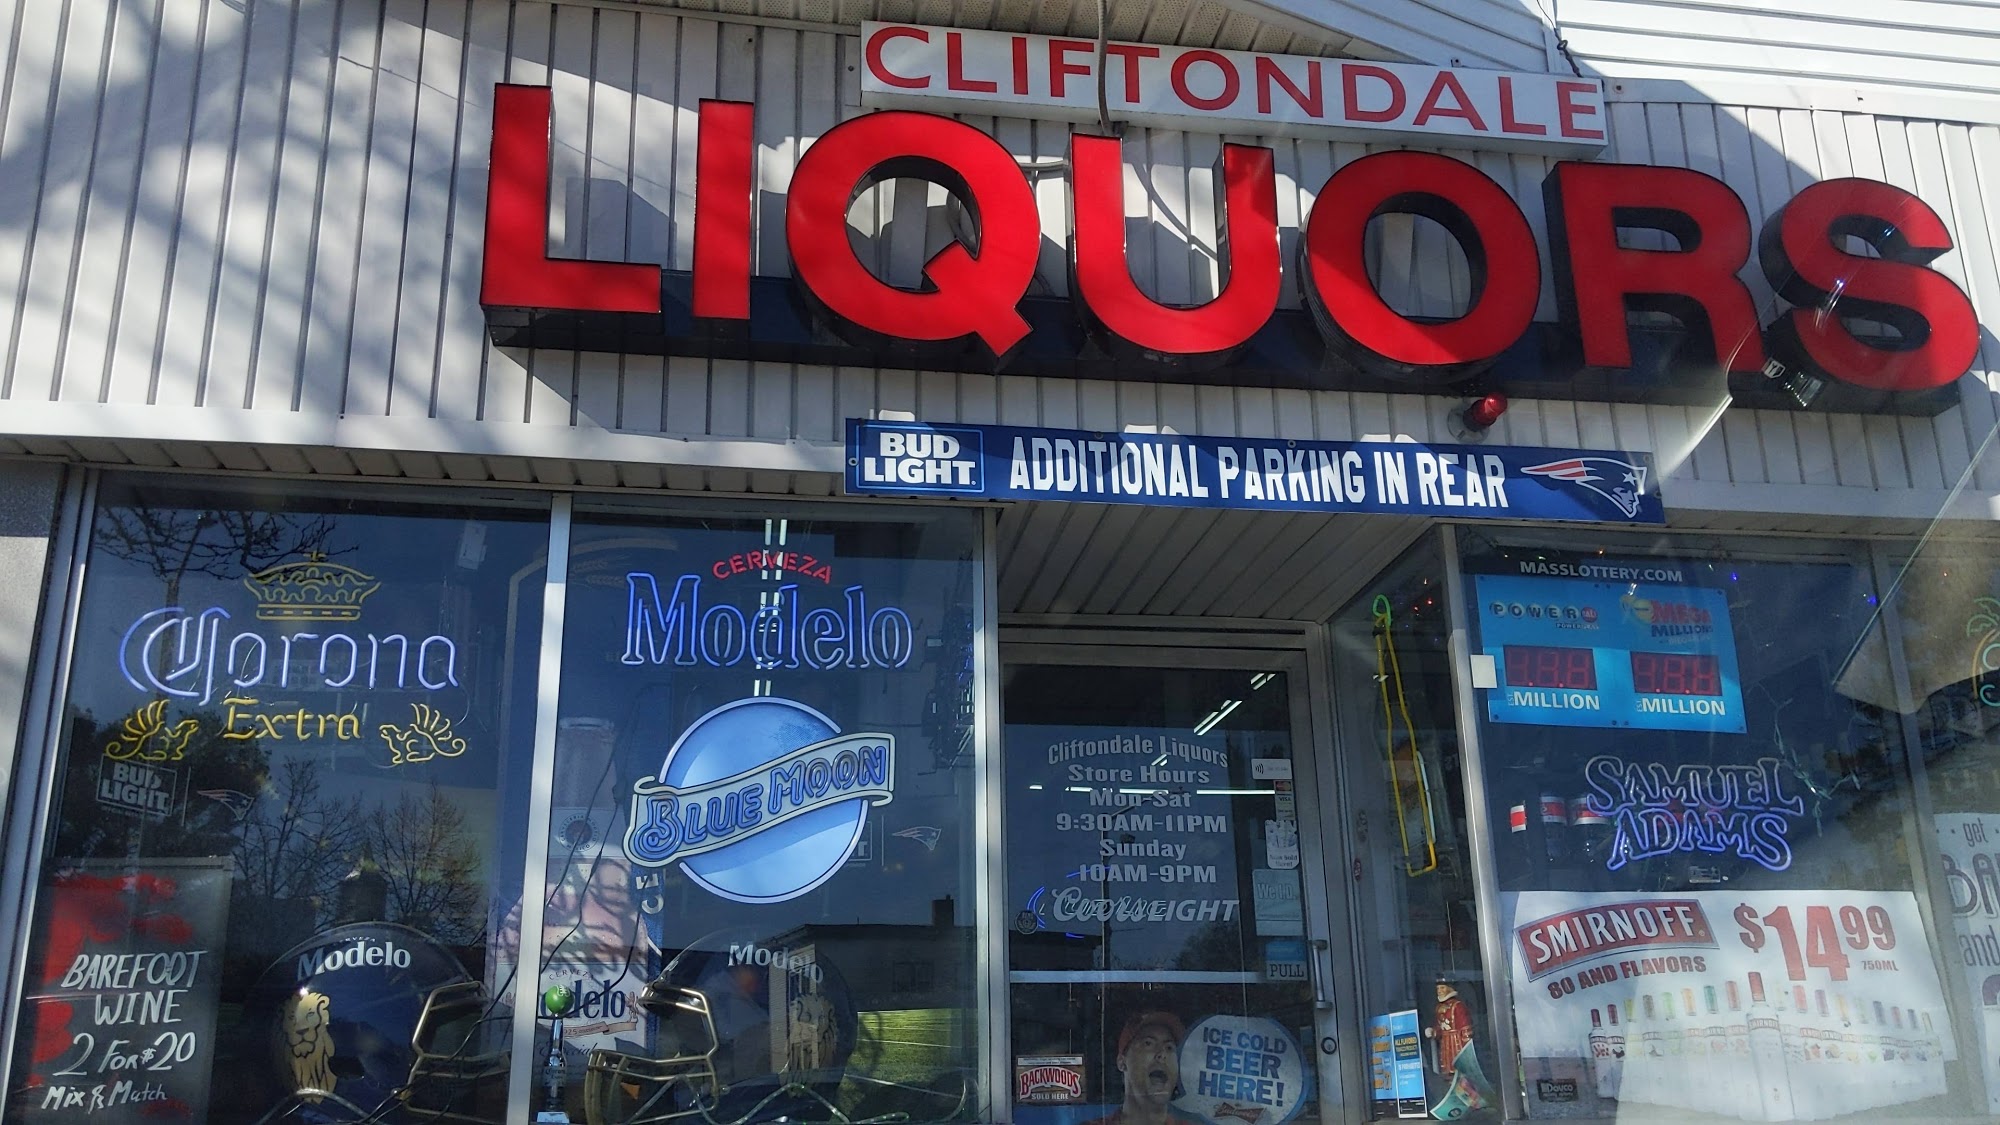 Cliftondale Liquors